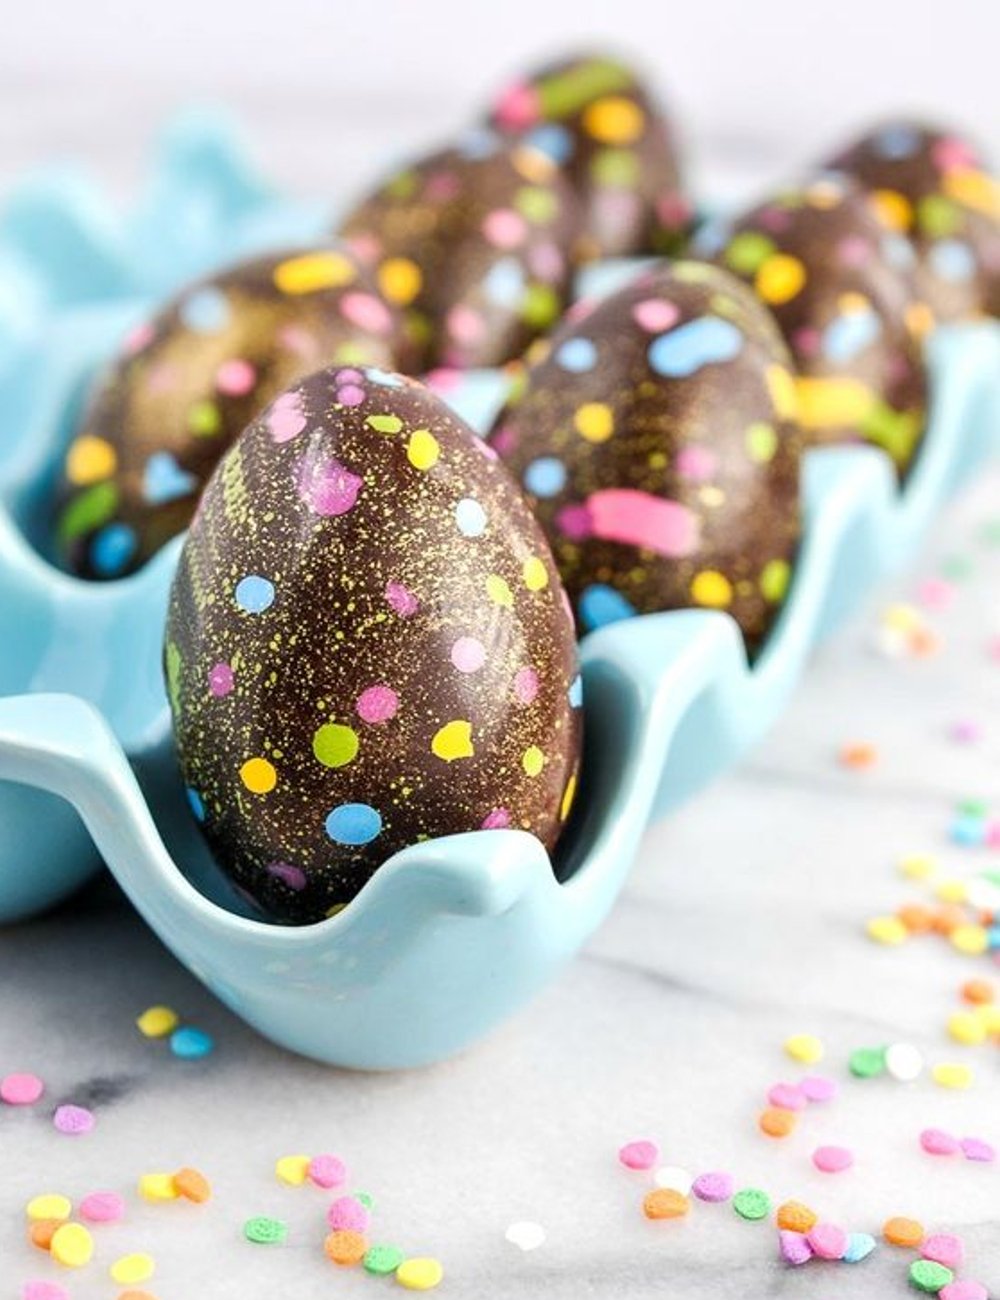 Ovo de páscoa - páscoa - ovo de páscoa de cada signo - comida - chocolate - https://stealthelook.com.br